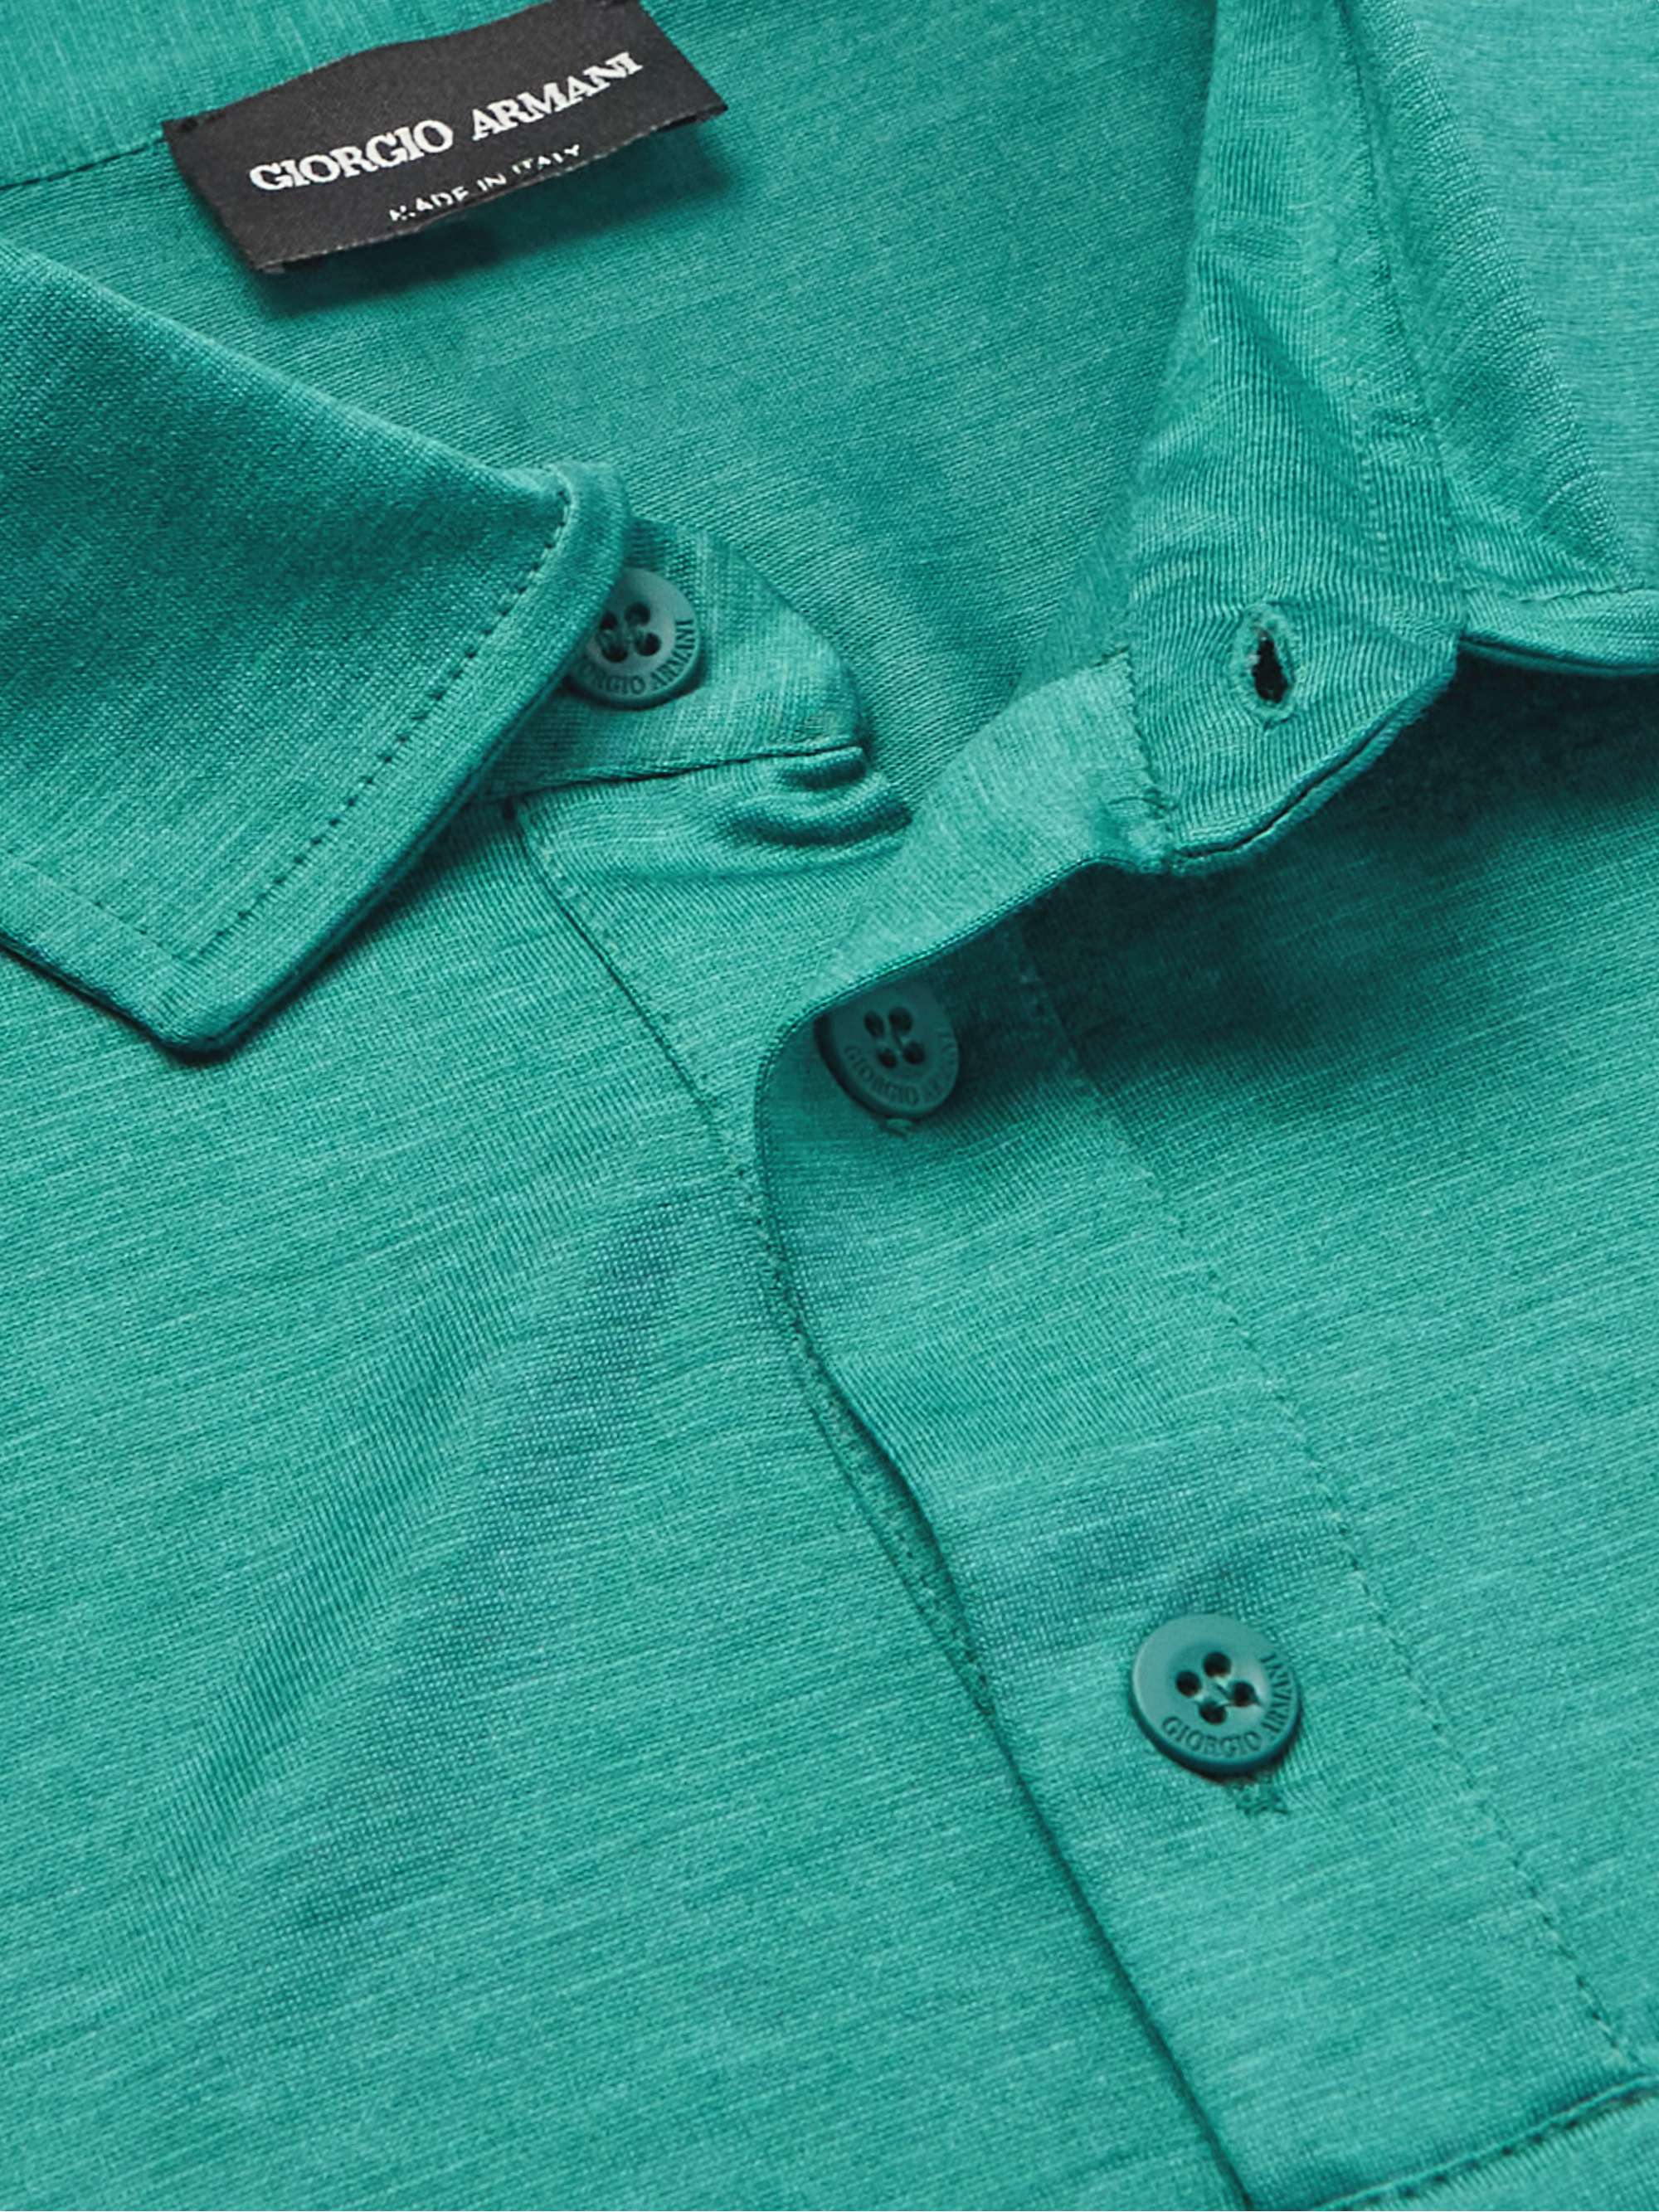 GIORGIO ARMANI Slim-Fit Silk and Cotton-Blend Polo Shirt